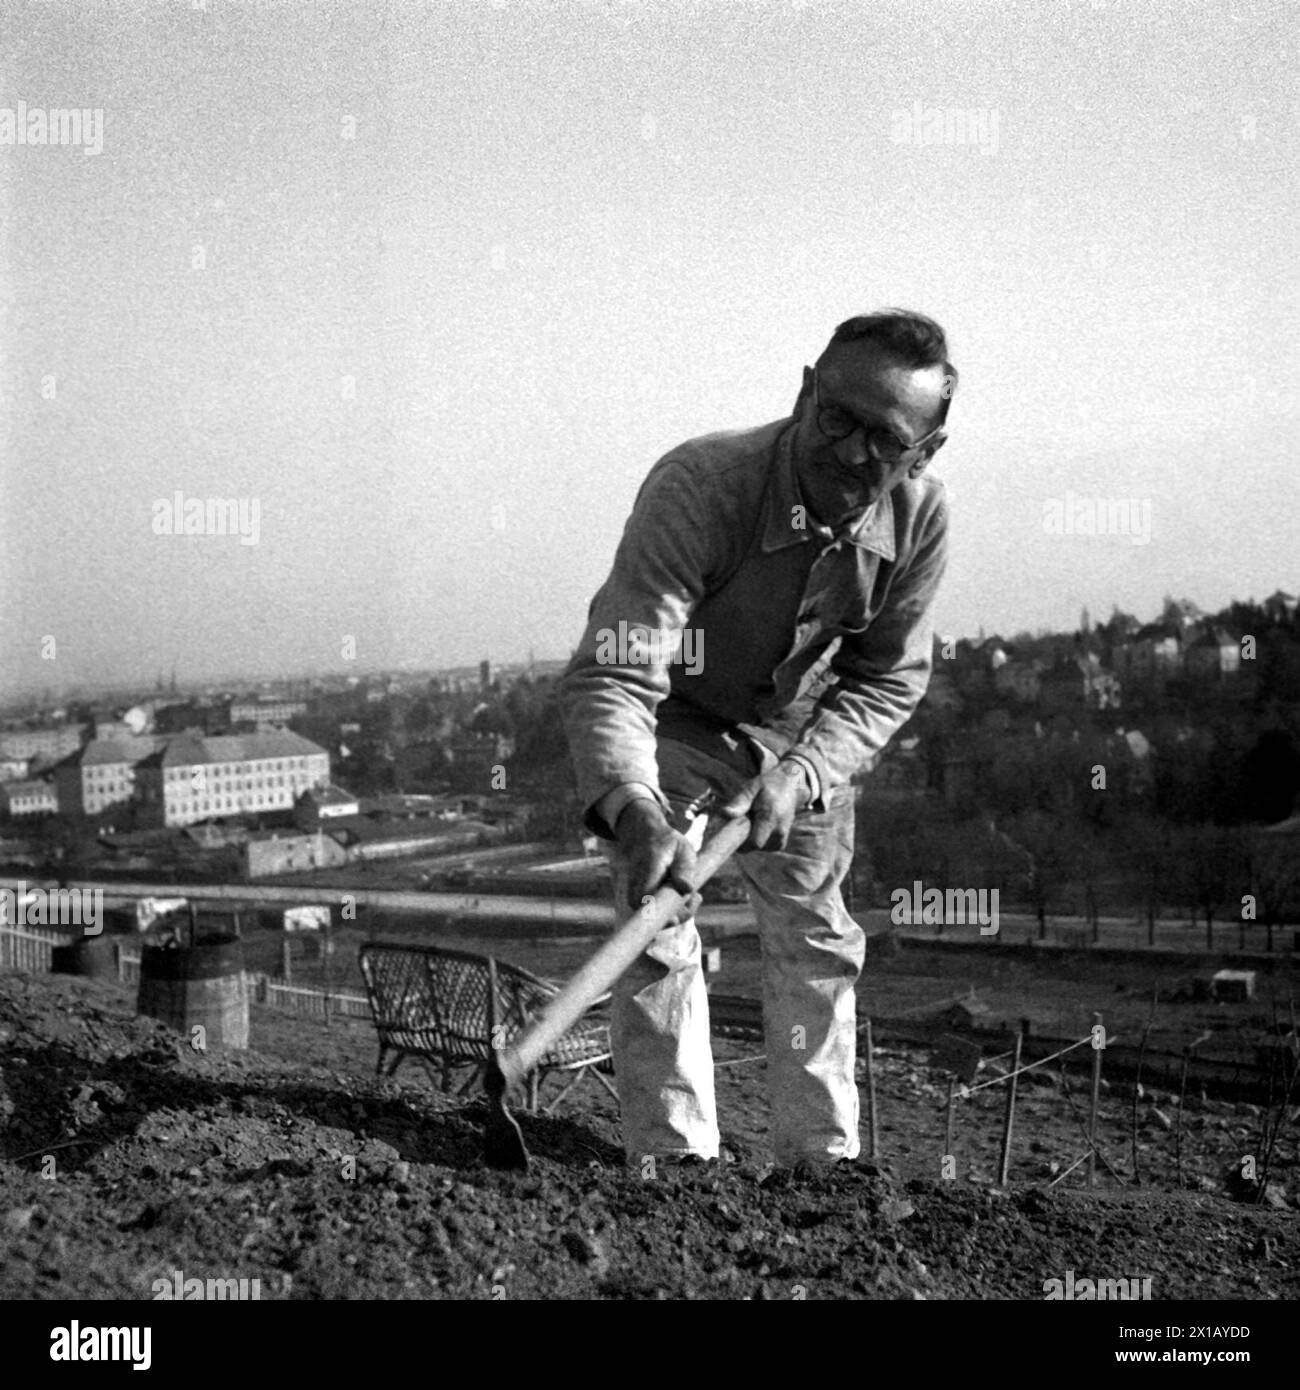 Giardino di allotment, giardiniere di allotment sgancia con cramp the soil a bed, 16.04.1949 - 19490416 PD0006 - Rechteinfo: Rights Managed (RM) Foto Stock